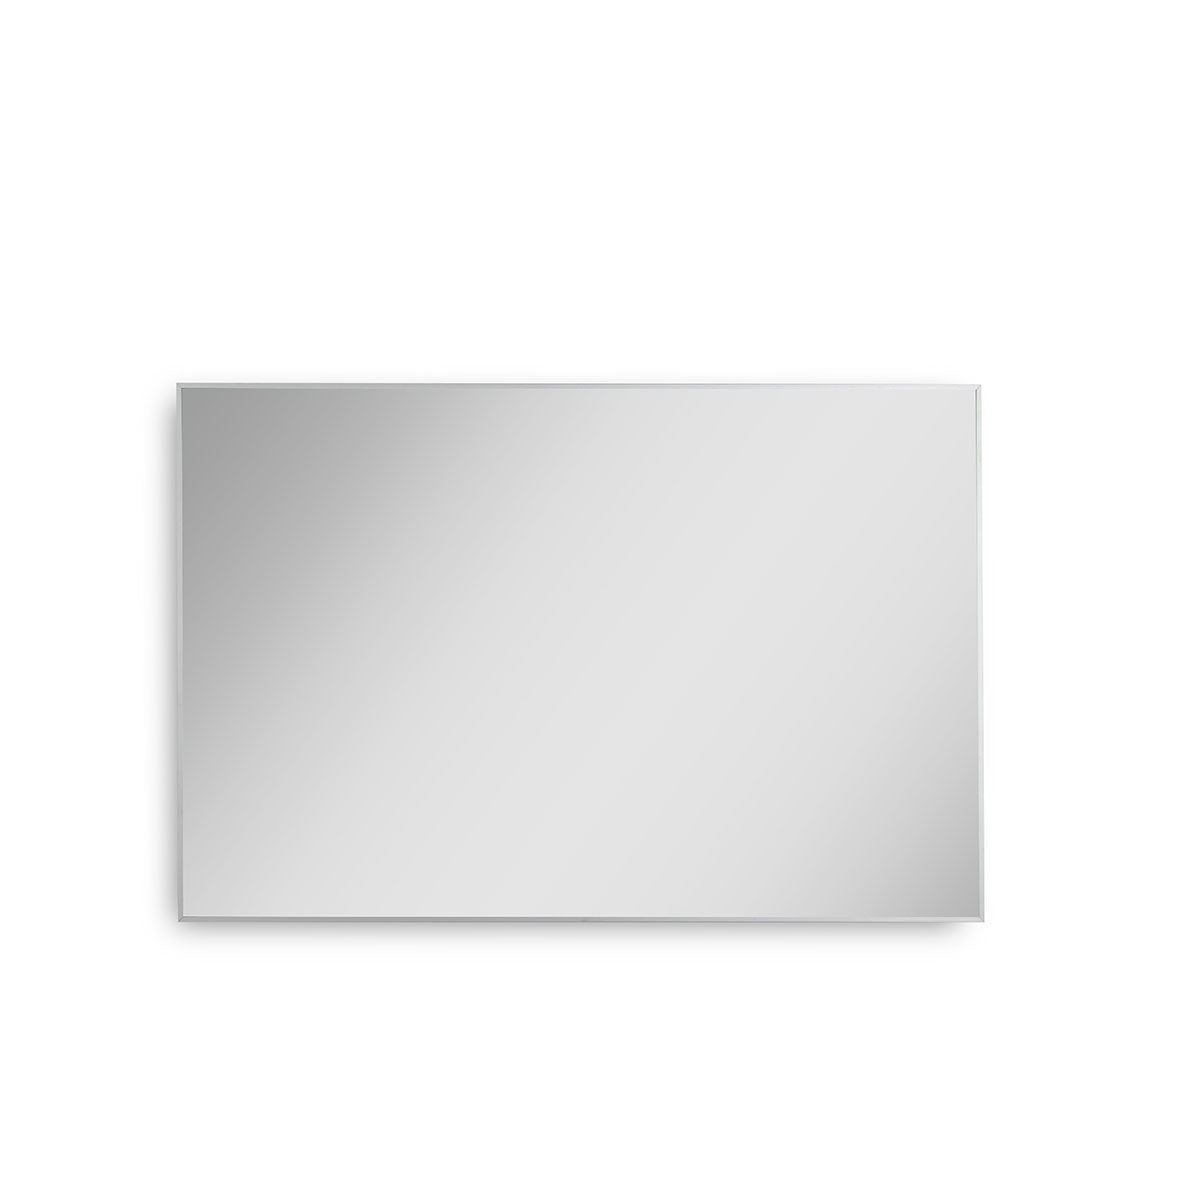 48"w x 32"h Aluminum Rectangle Bathroom Wall Mirror (Silver) - iStyle Bath